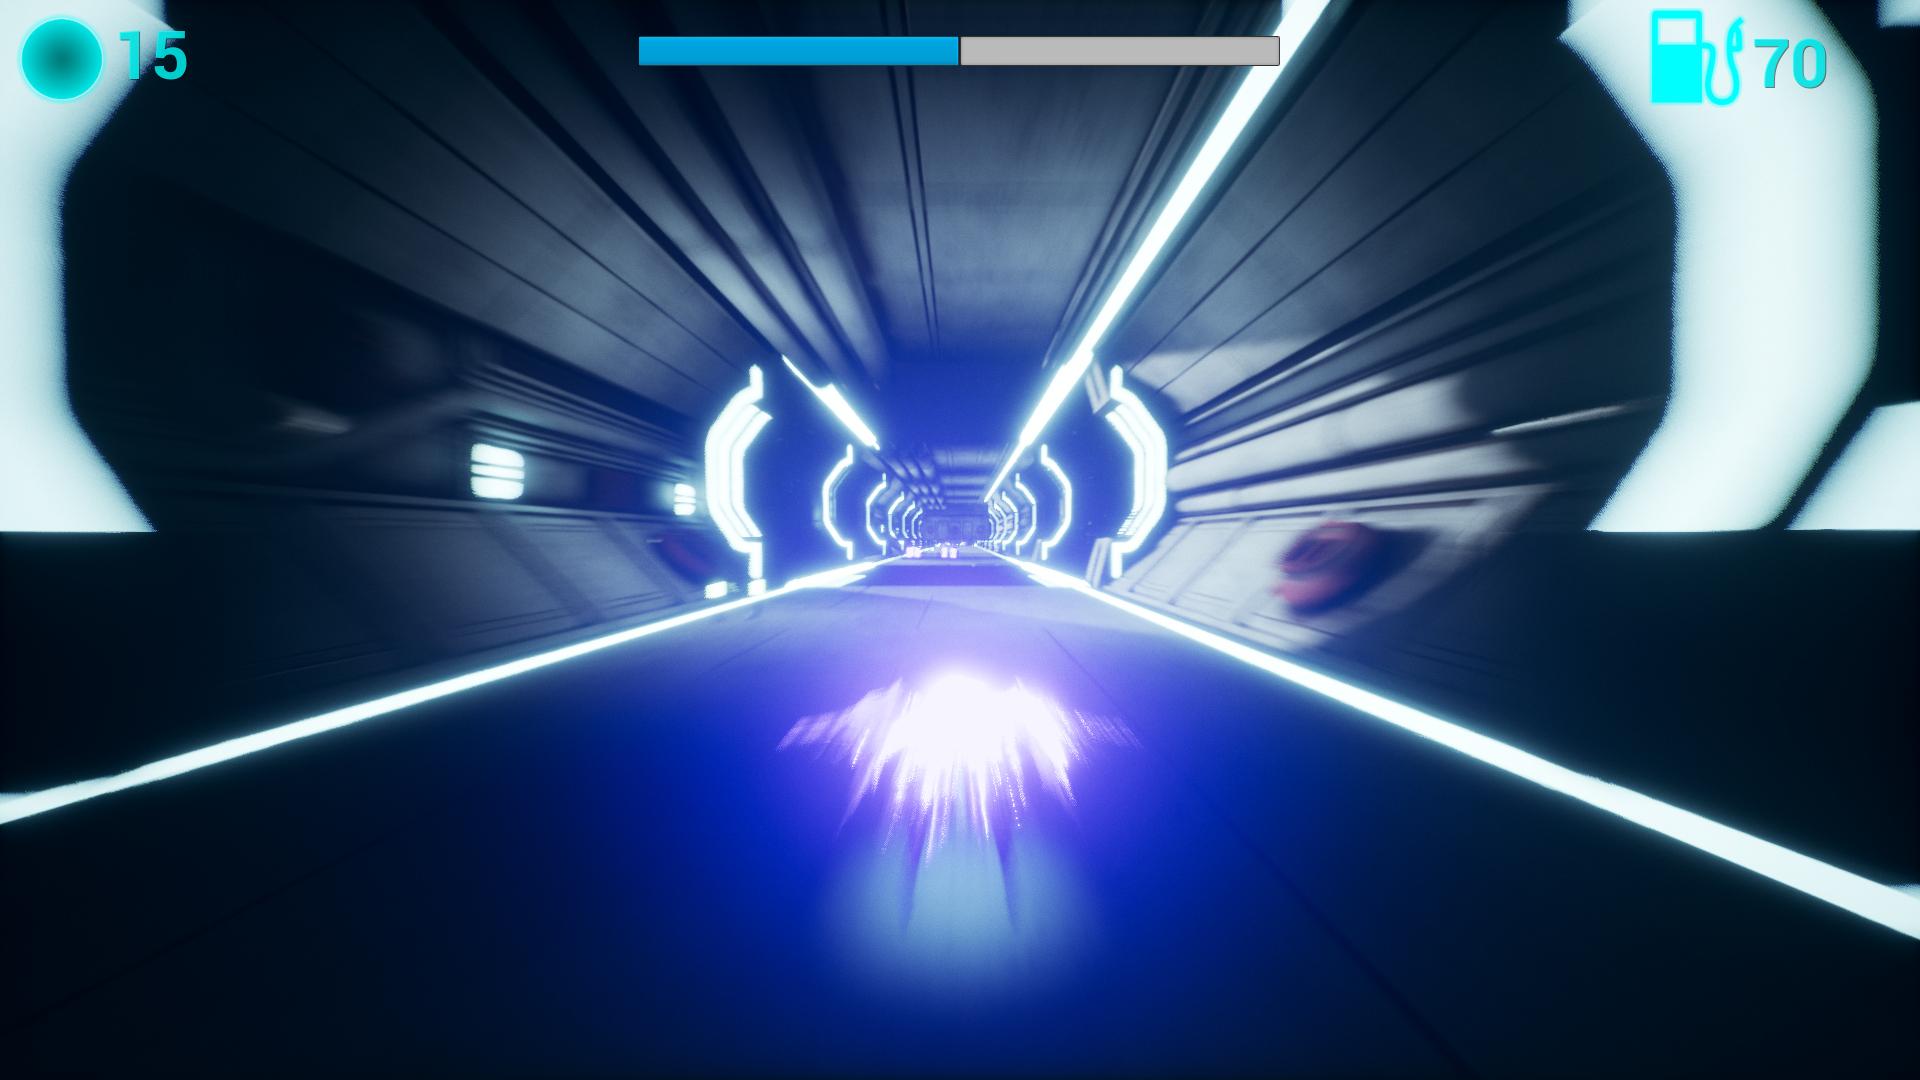 Screenshot №4 from game Deep Space Dash